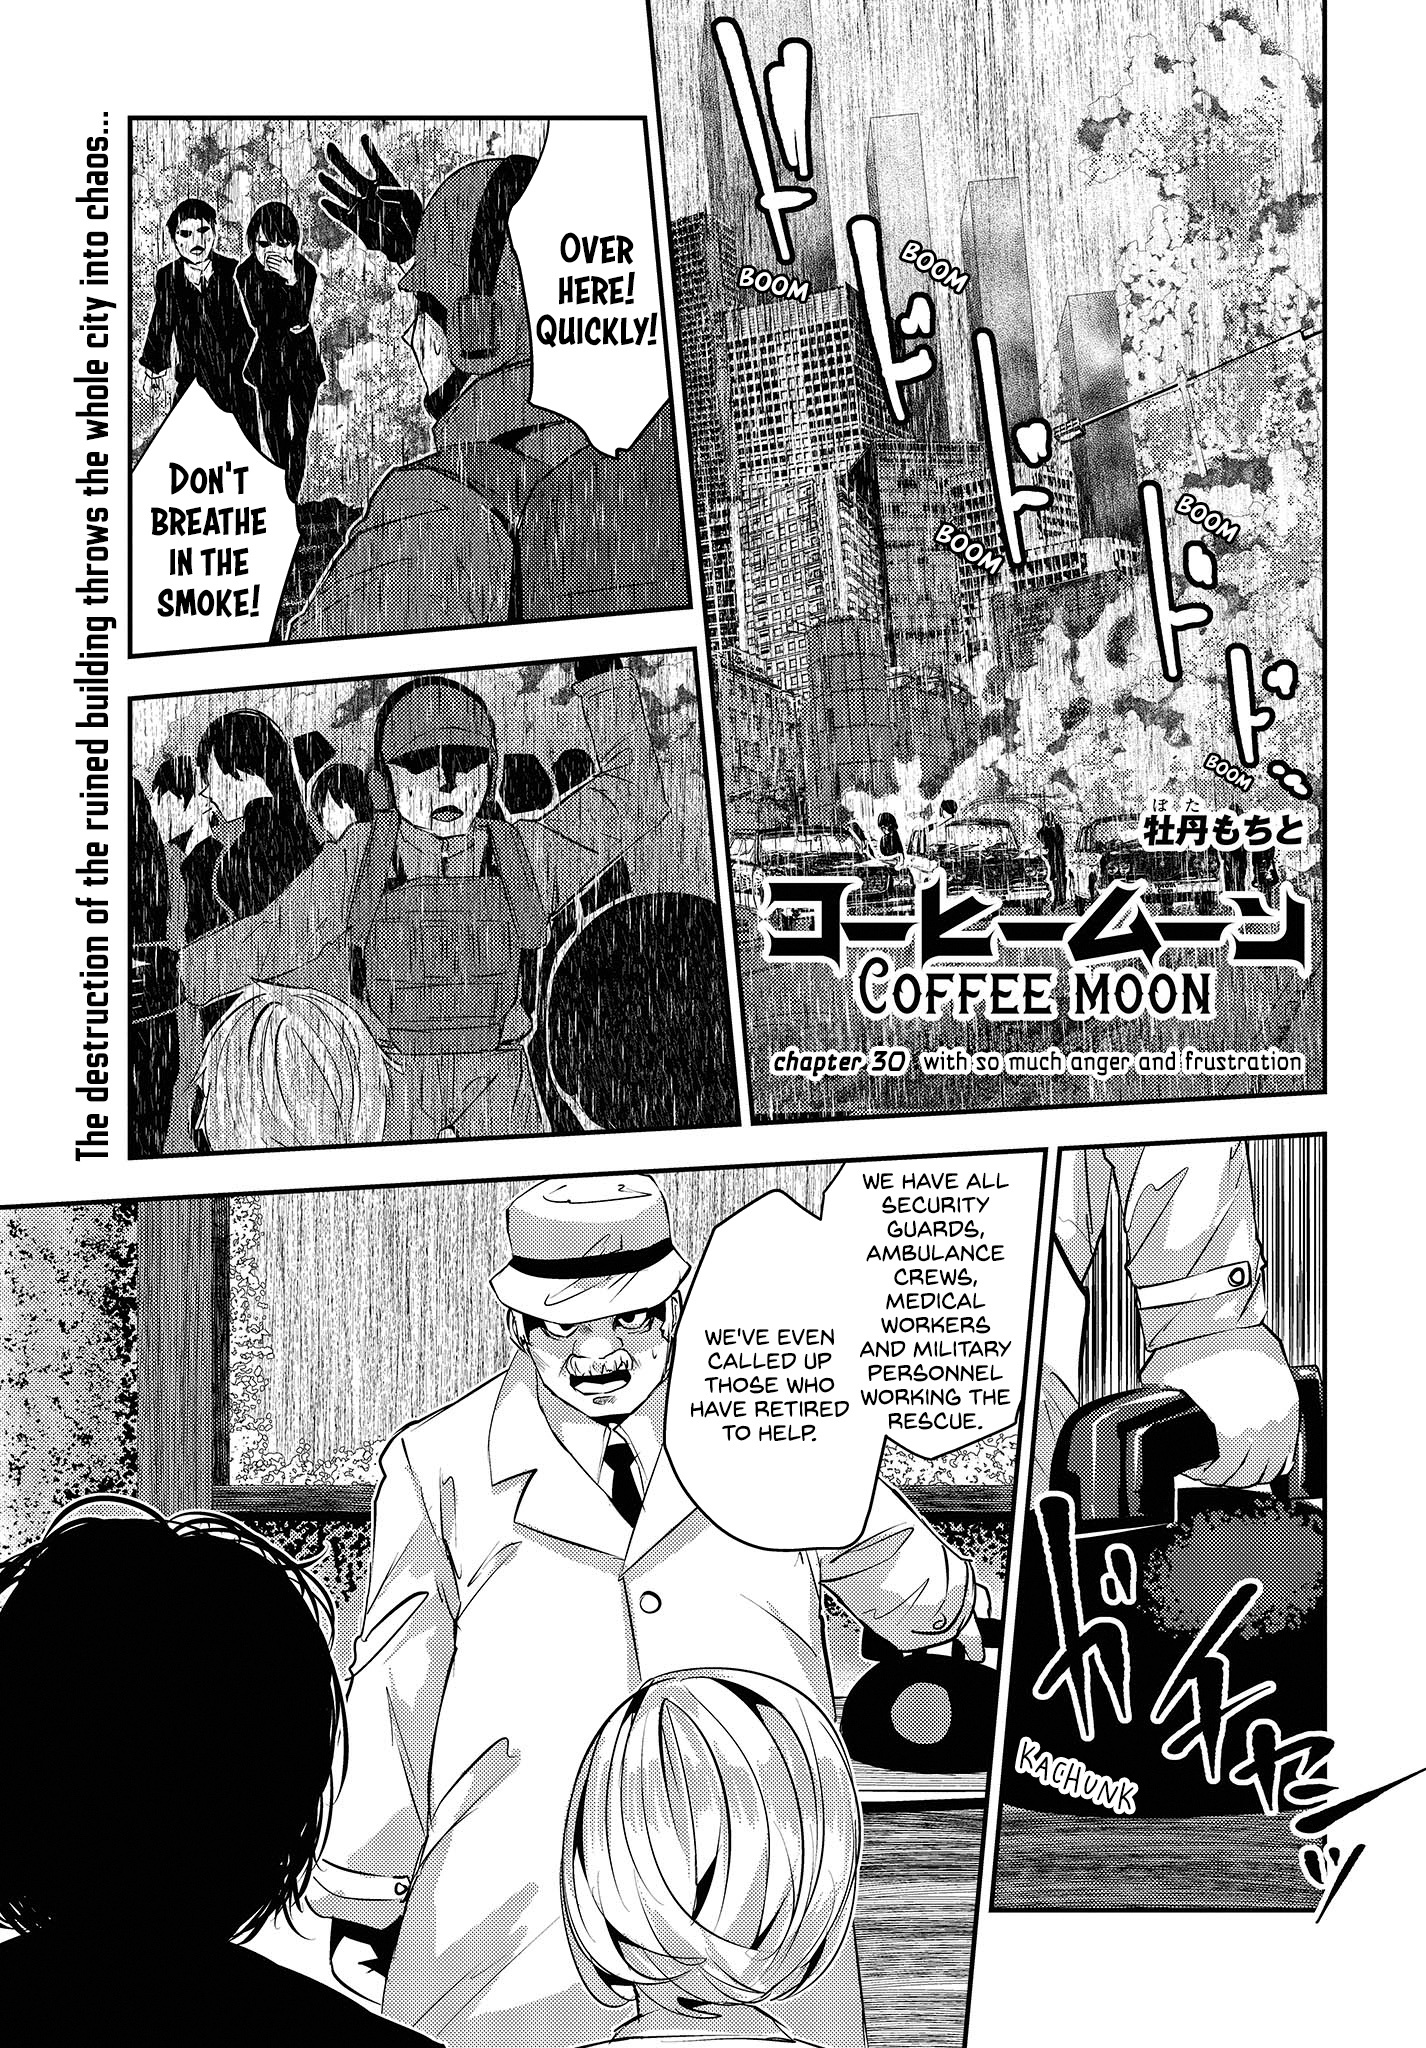 Coffee Moon - Page 1